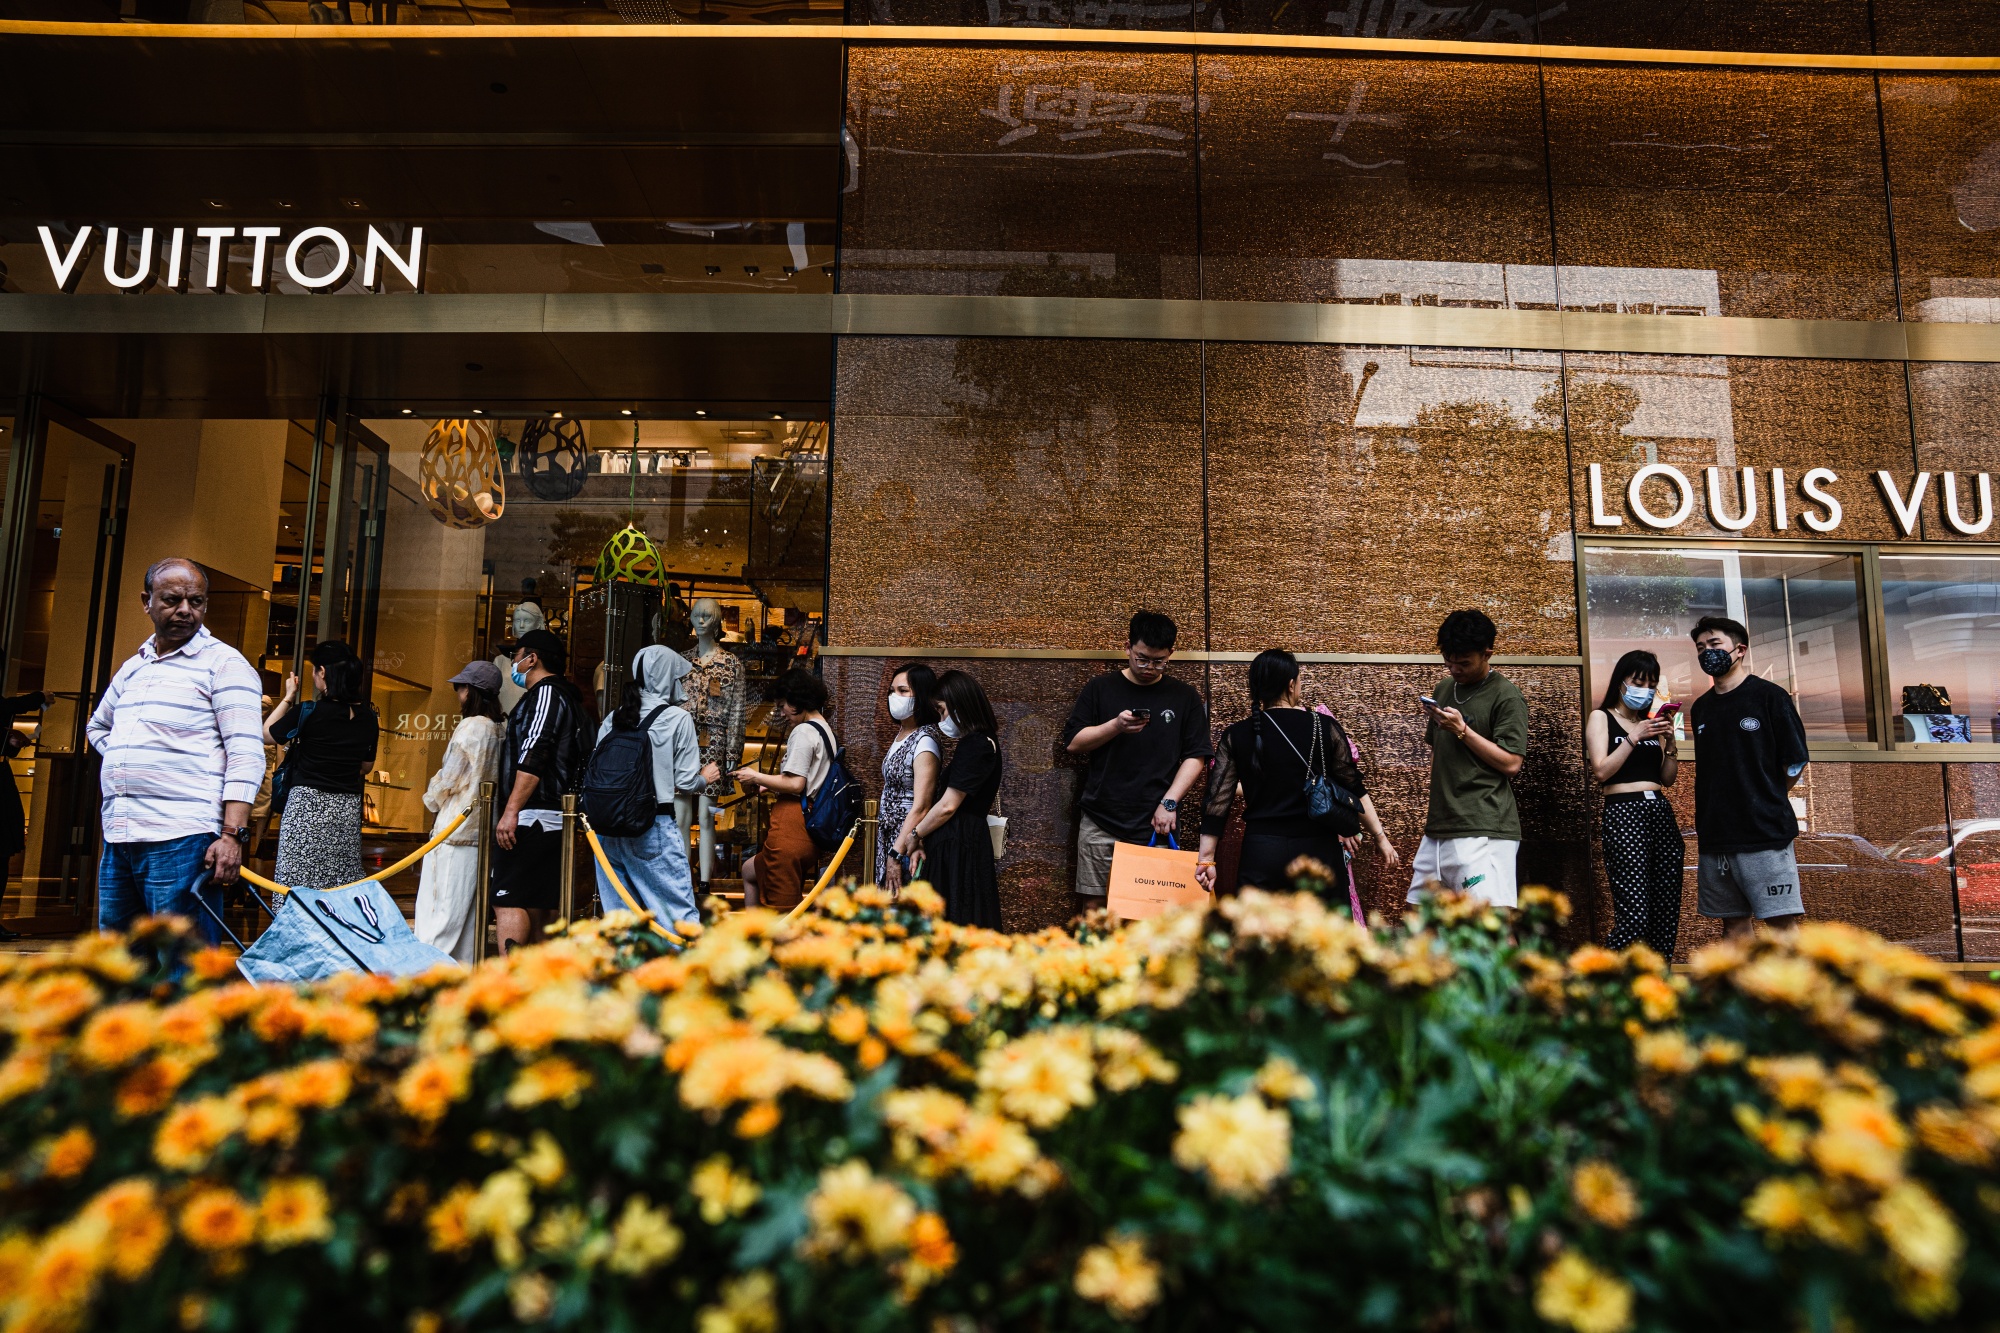 Louis Vuitton boutique concept - Interna